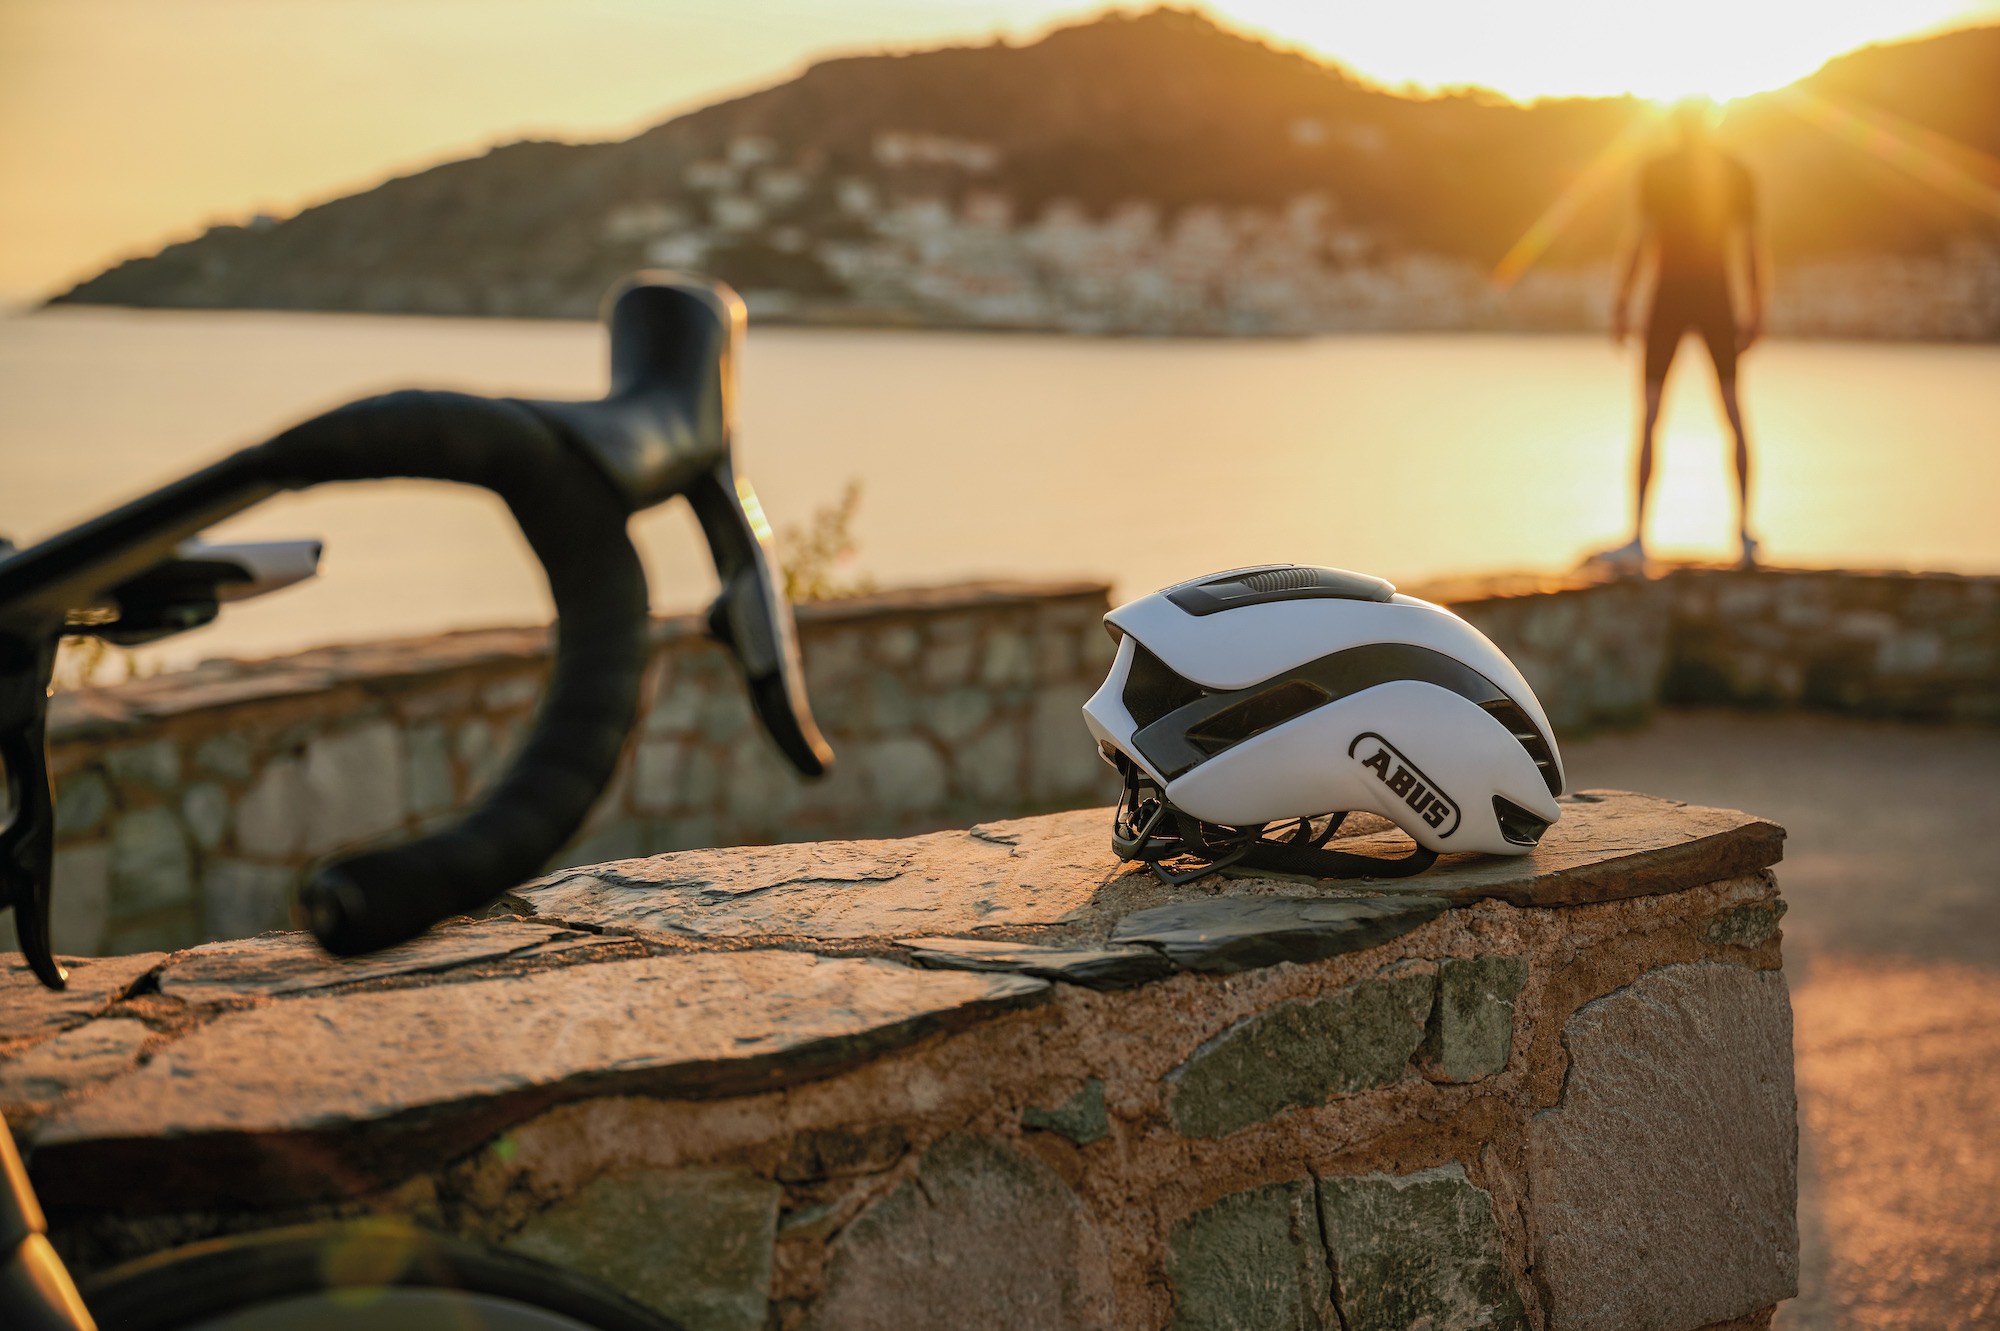 Introducing the ABUS GameChanger 2.0 helmet: improved aerodynamics and maximum comfort